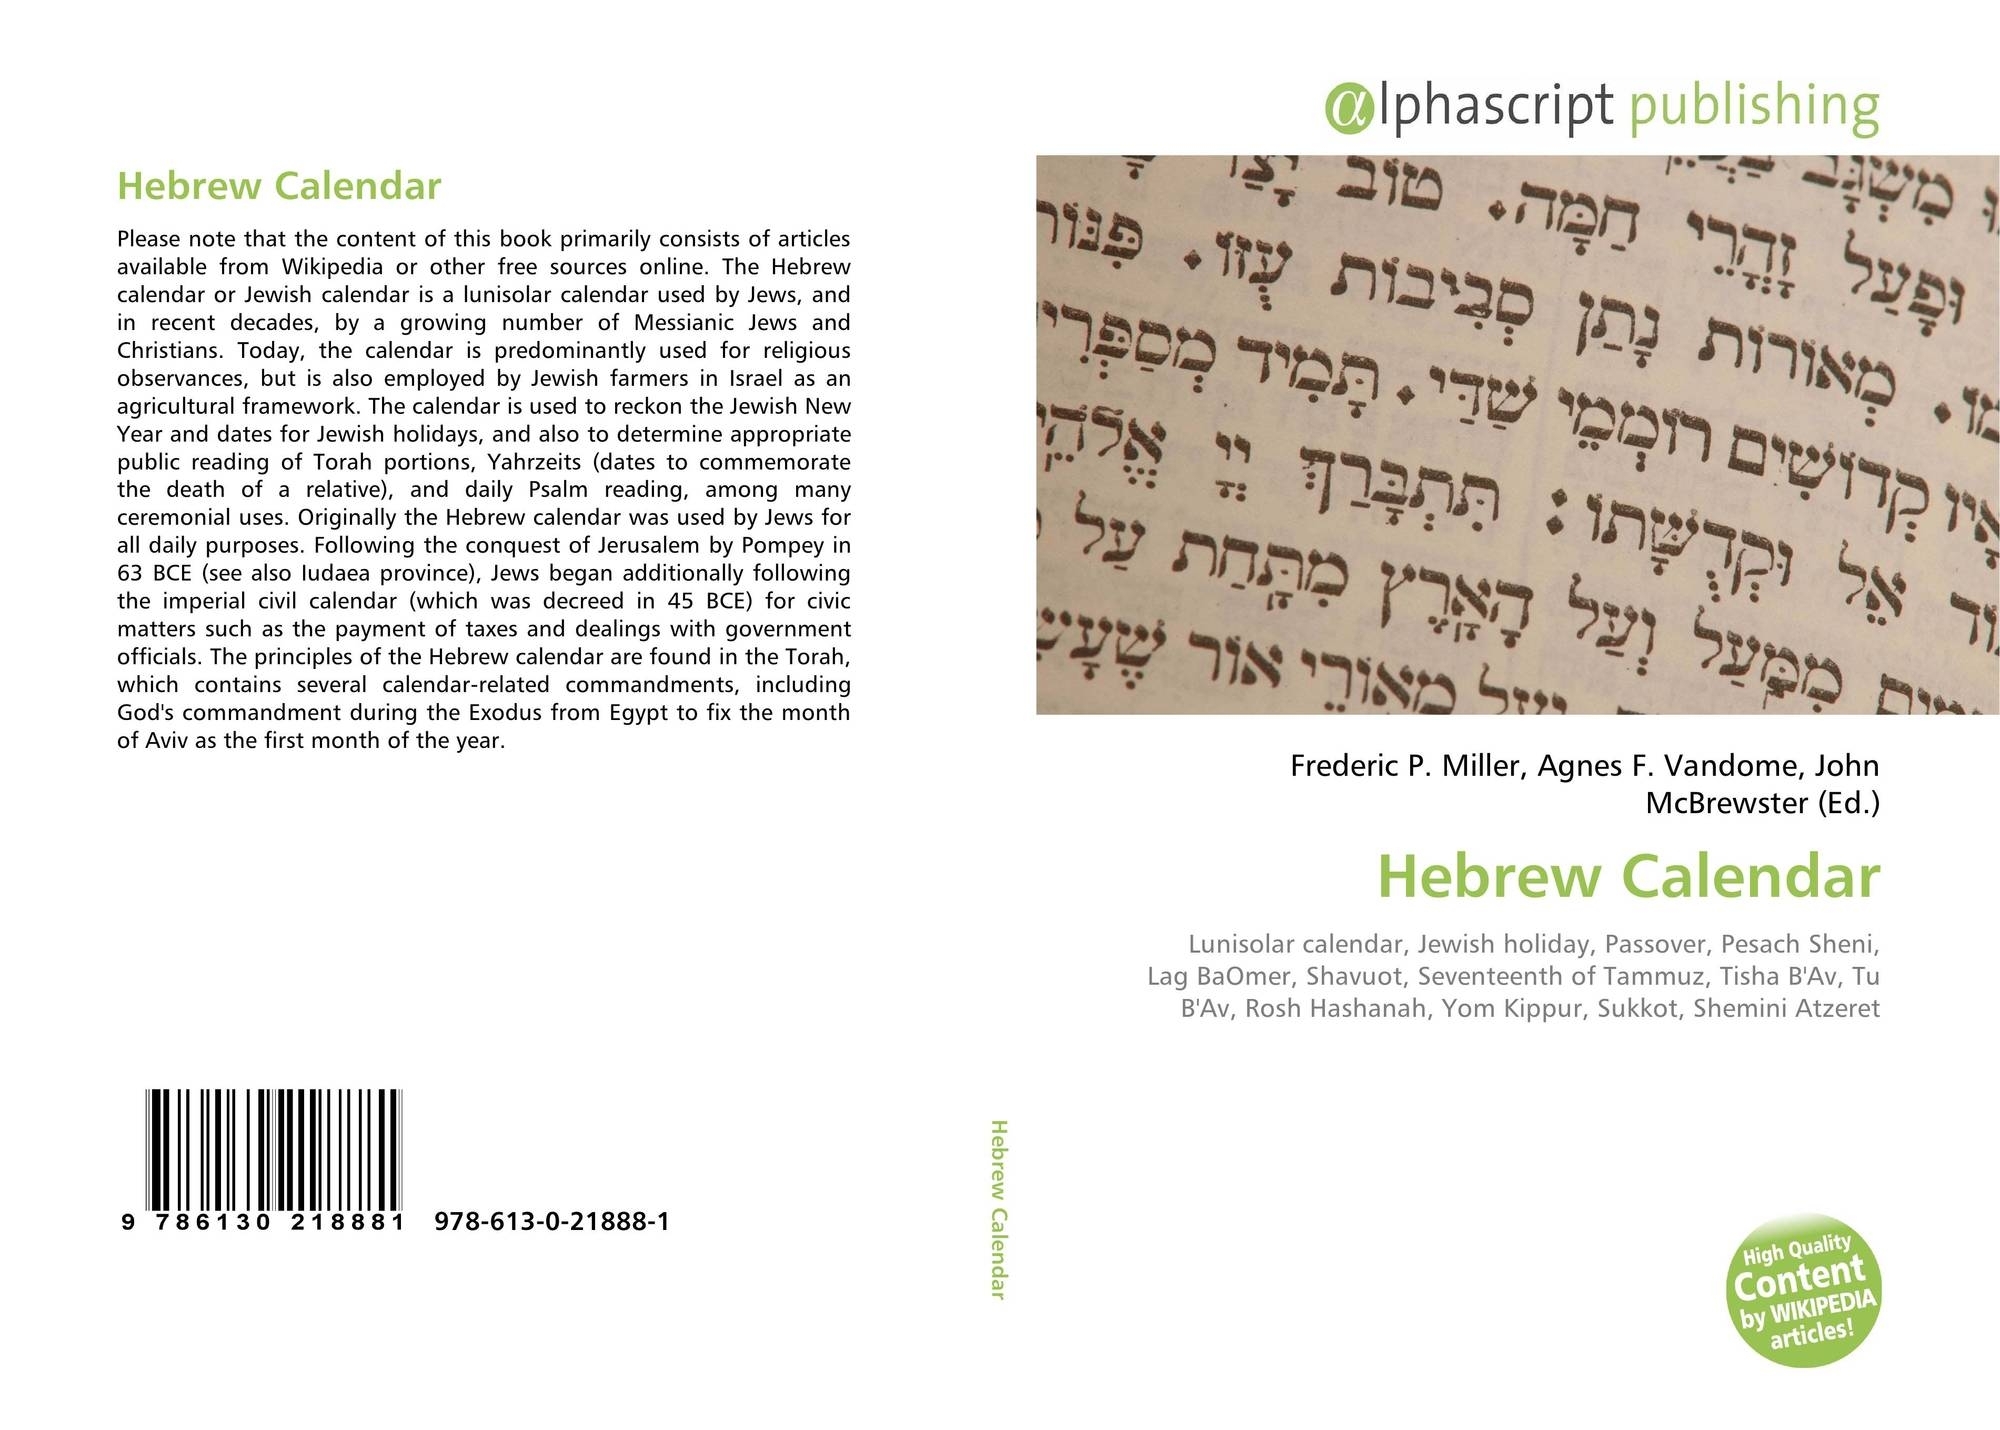 Hebrew Calendar, 978-613-0-21888-1, 6130218885 ,9786130218881